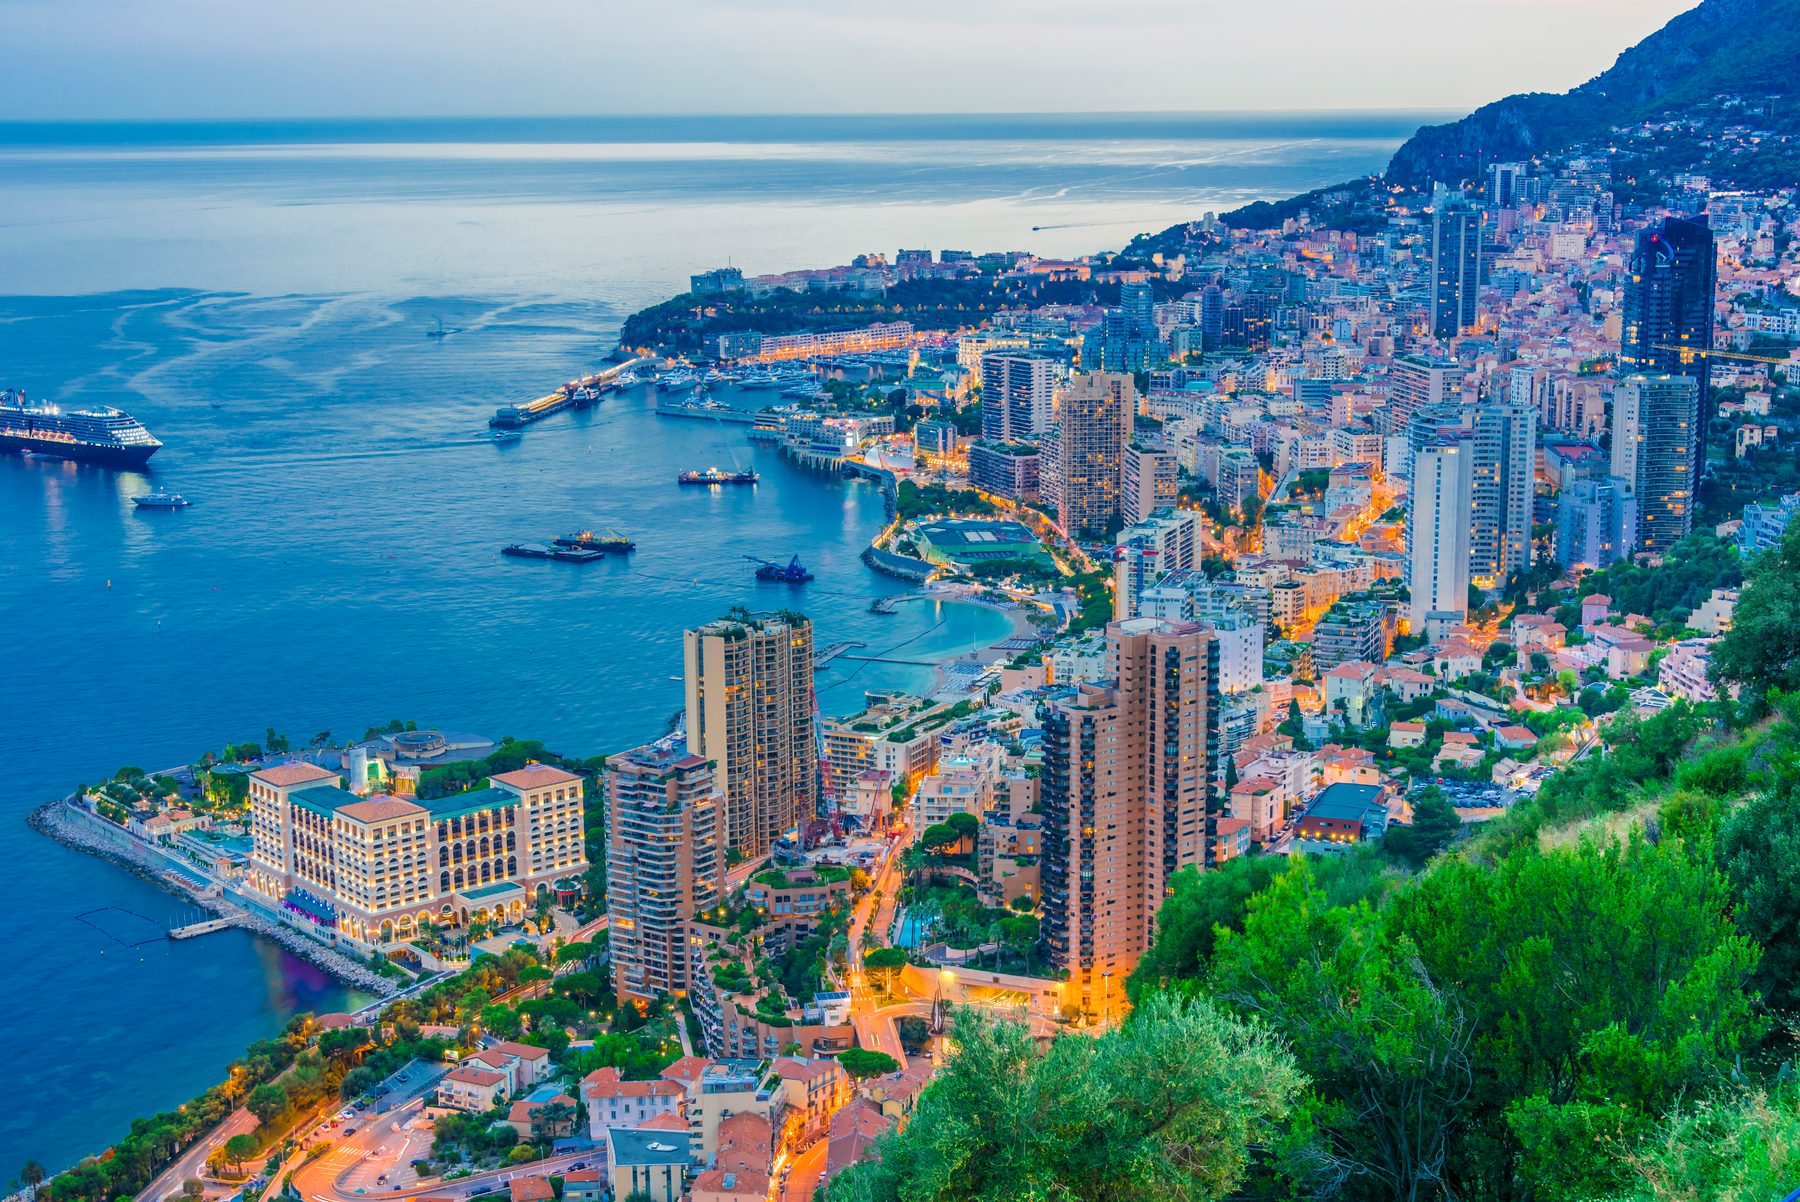 John and Tracey Ann: Monte Carlo, Principality of Monaco